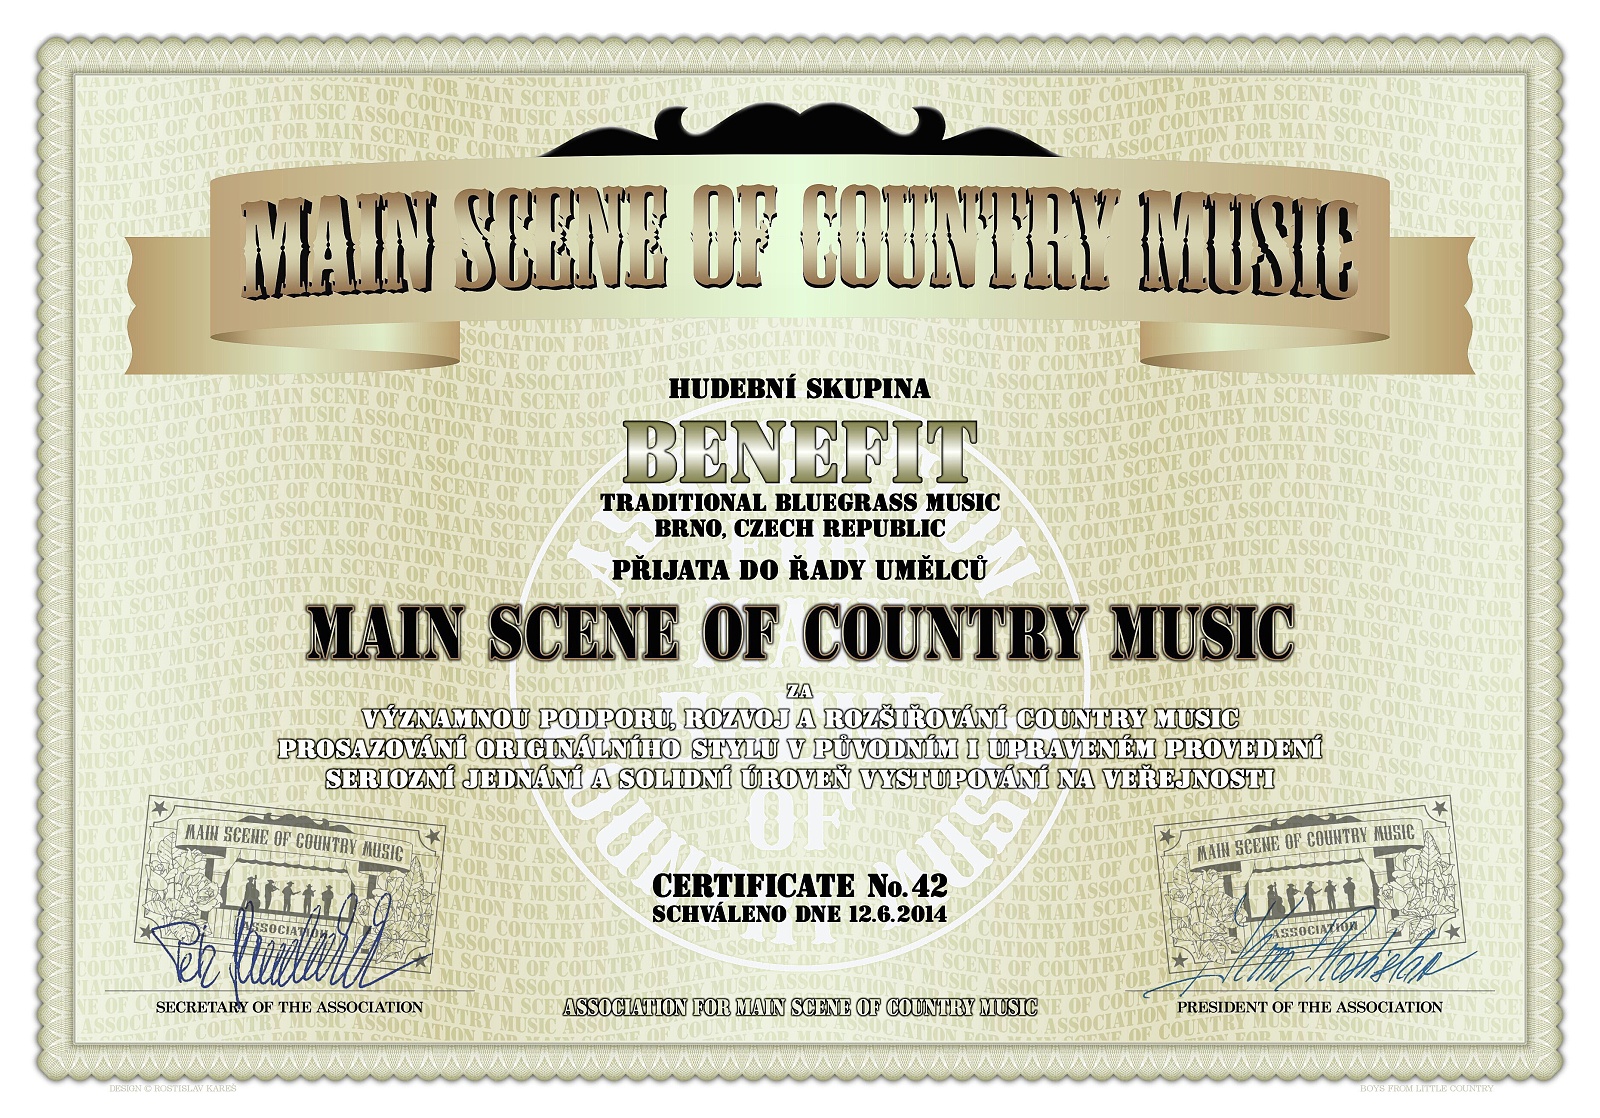 CE 42 - Main Scene of Country Music